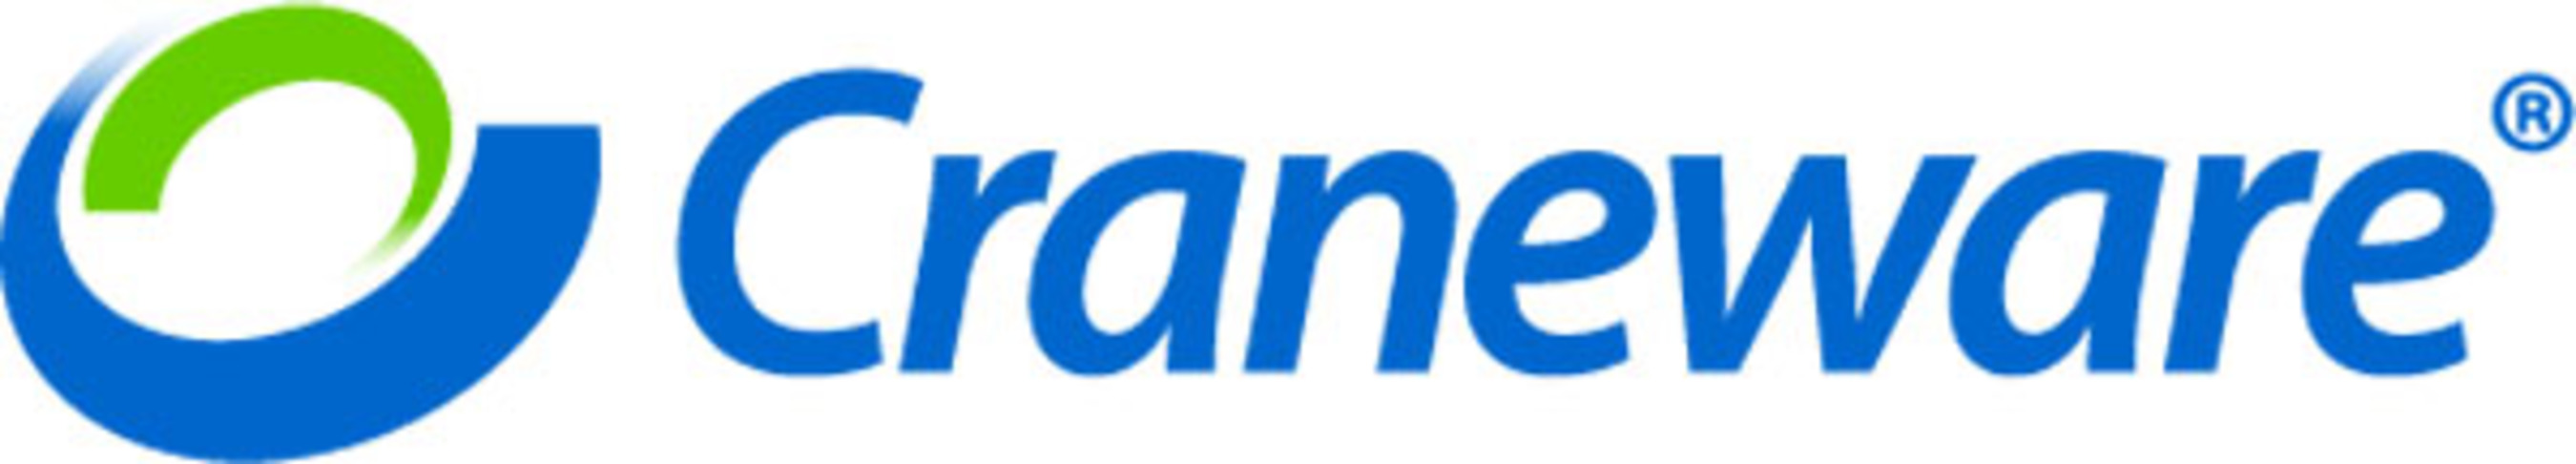 Craneware, Inc. logo. (PRNewsFoto/Craneware, Inc.) (PRNewsFoto/)